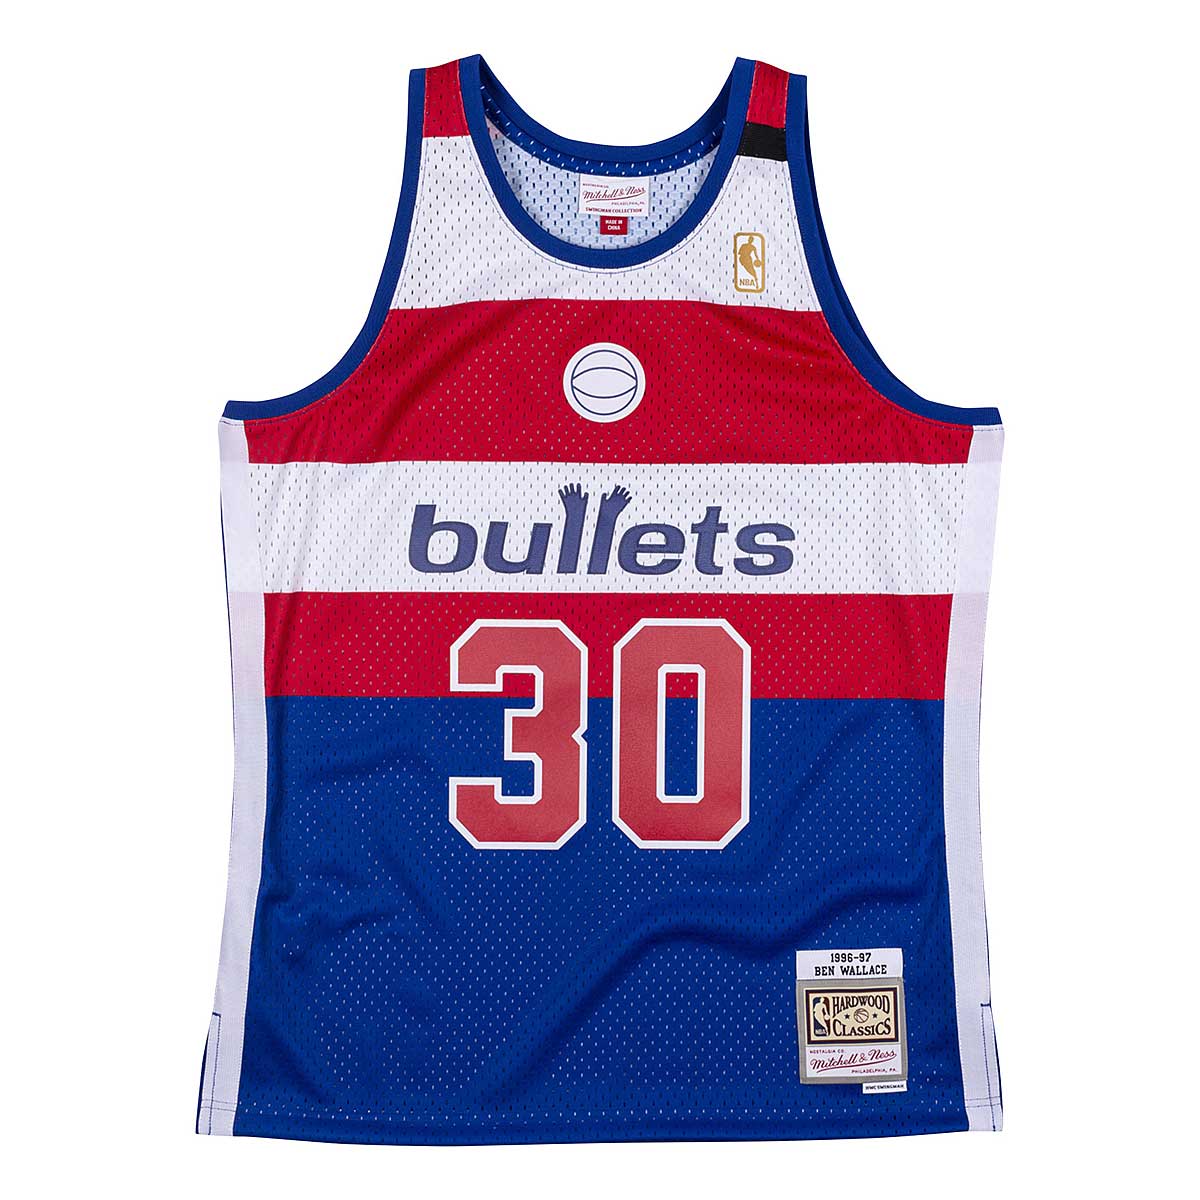 Mitchell And Ness Nba Swingman Jersey Washington Bullets 96 - Ben Wallace, Royal Bullets